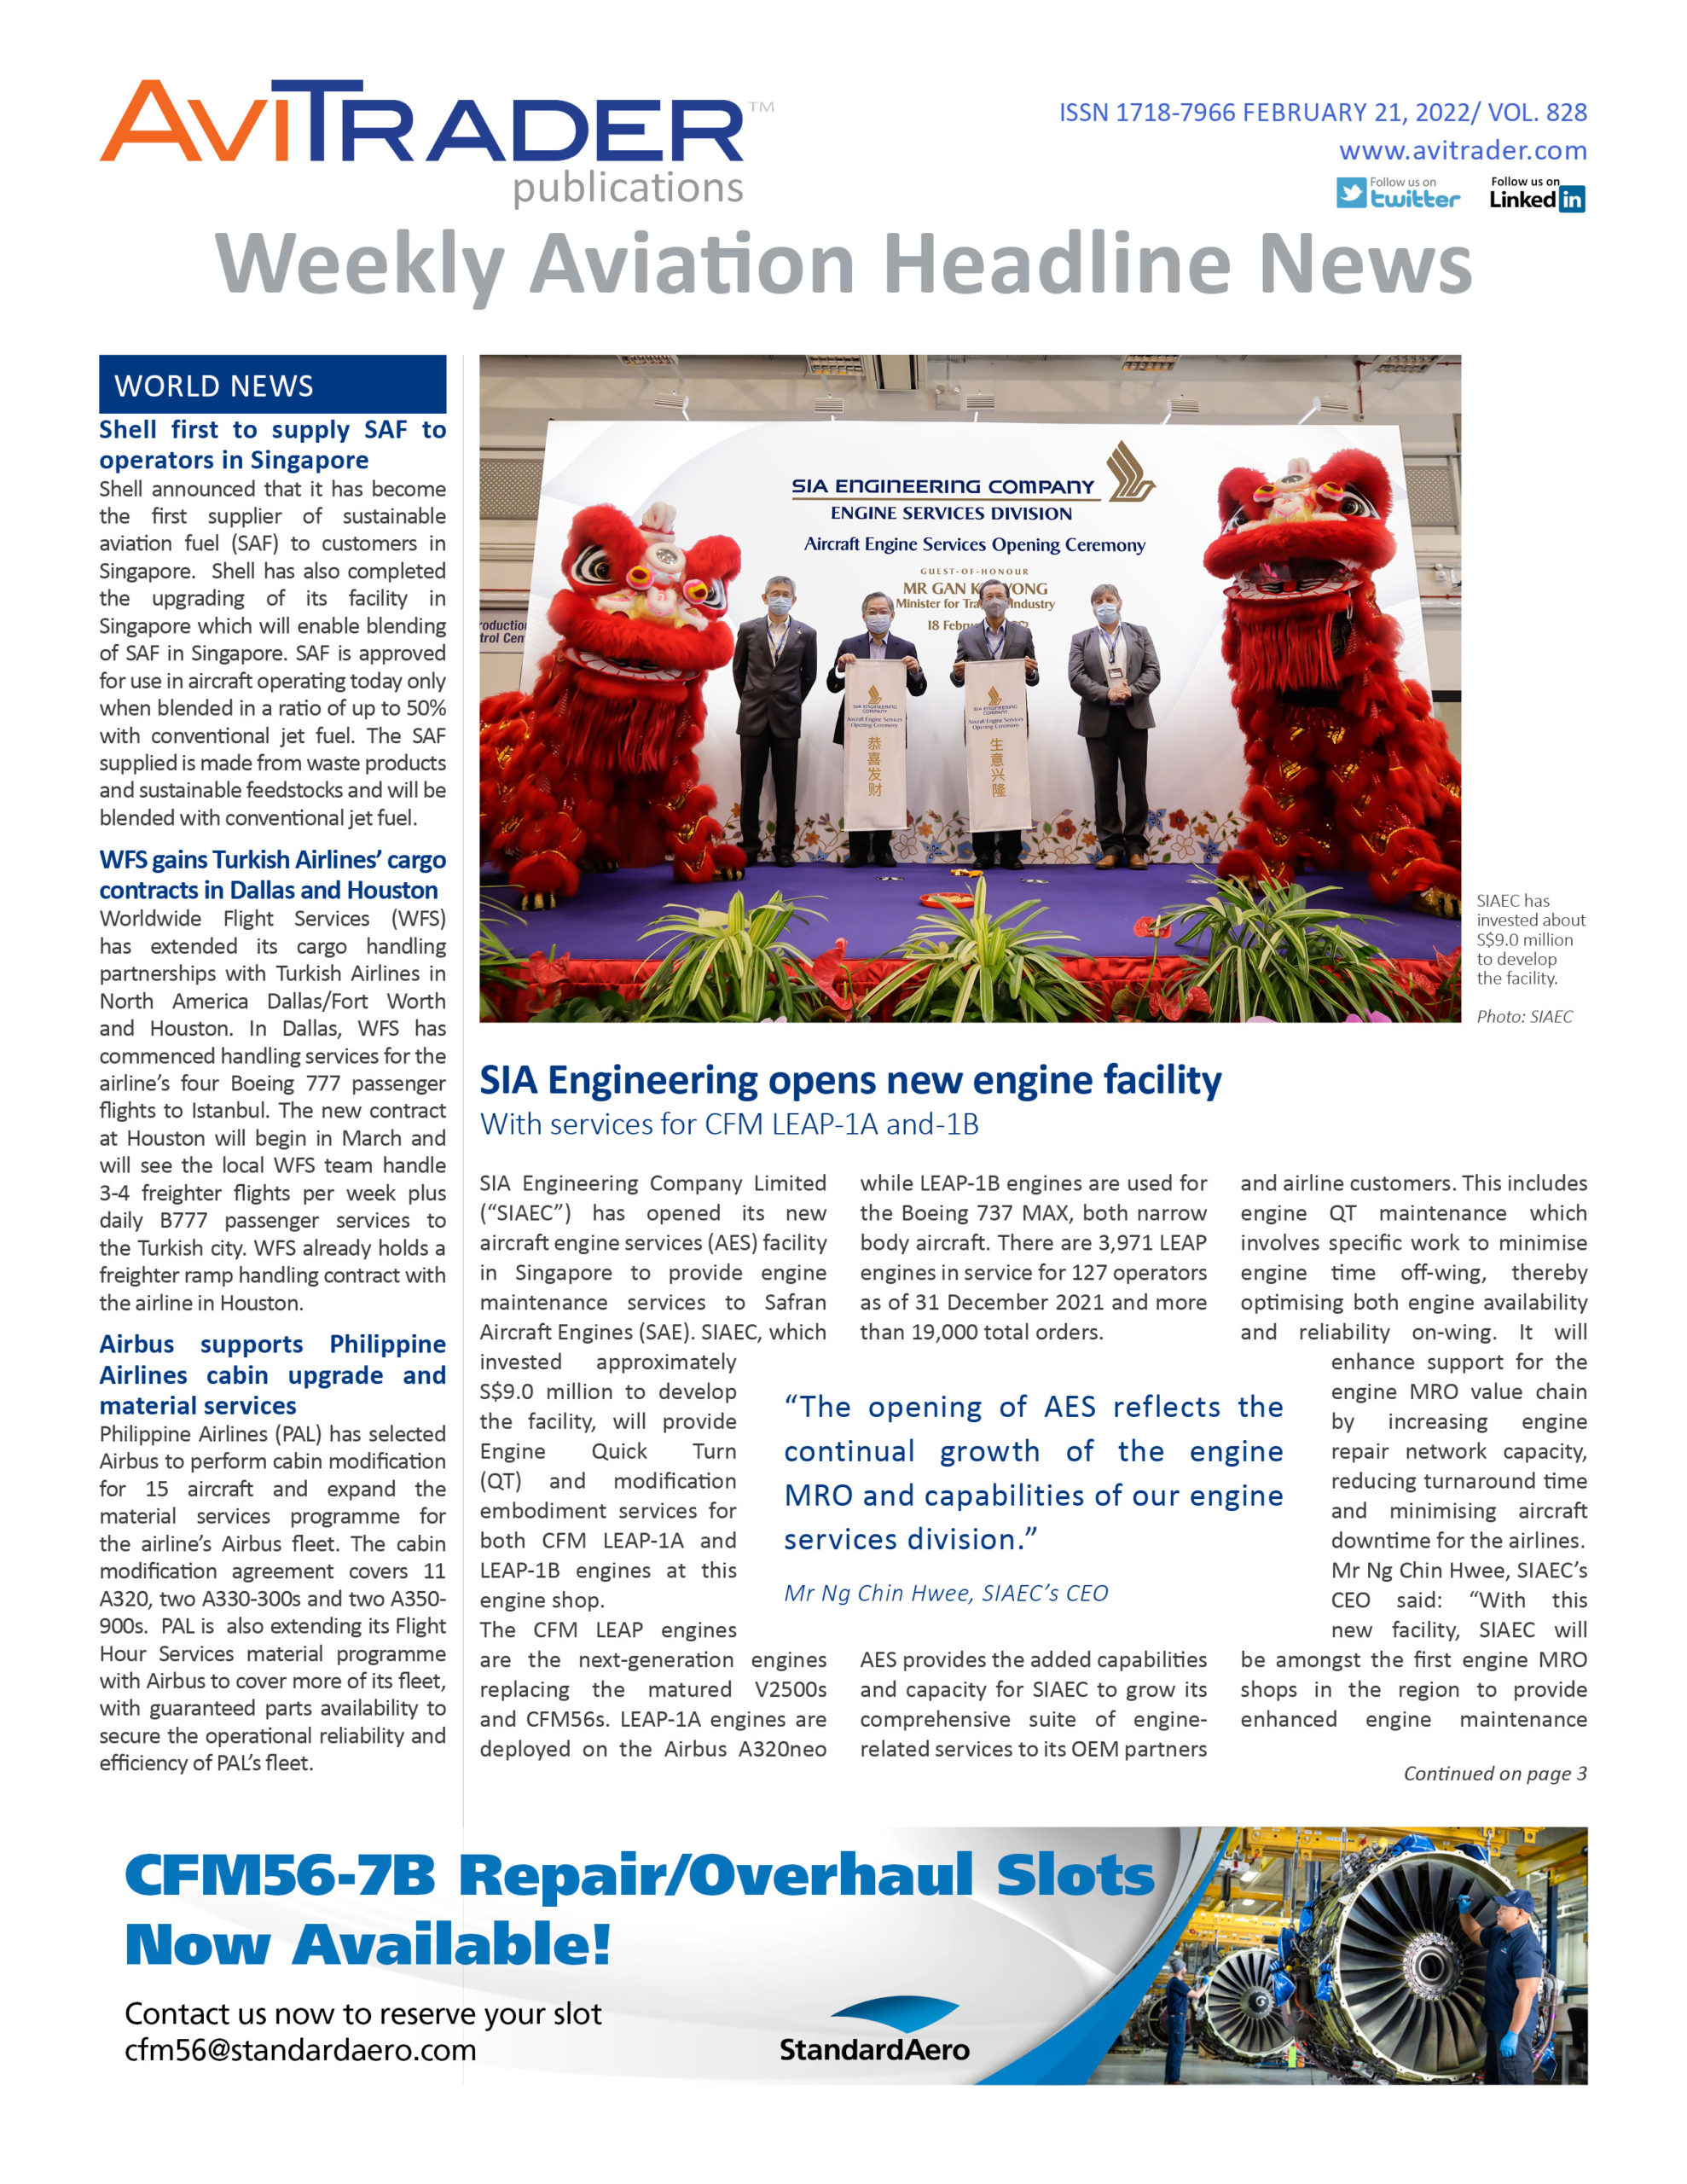 AviTrader_Weekly_Headline_News_Cover_2022-02-21